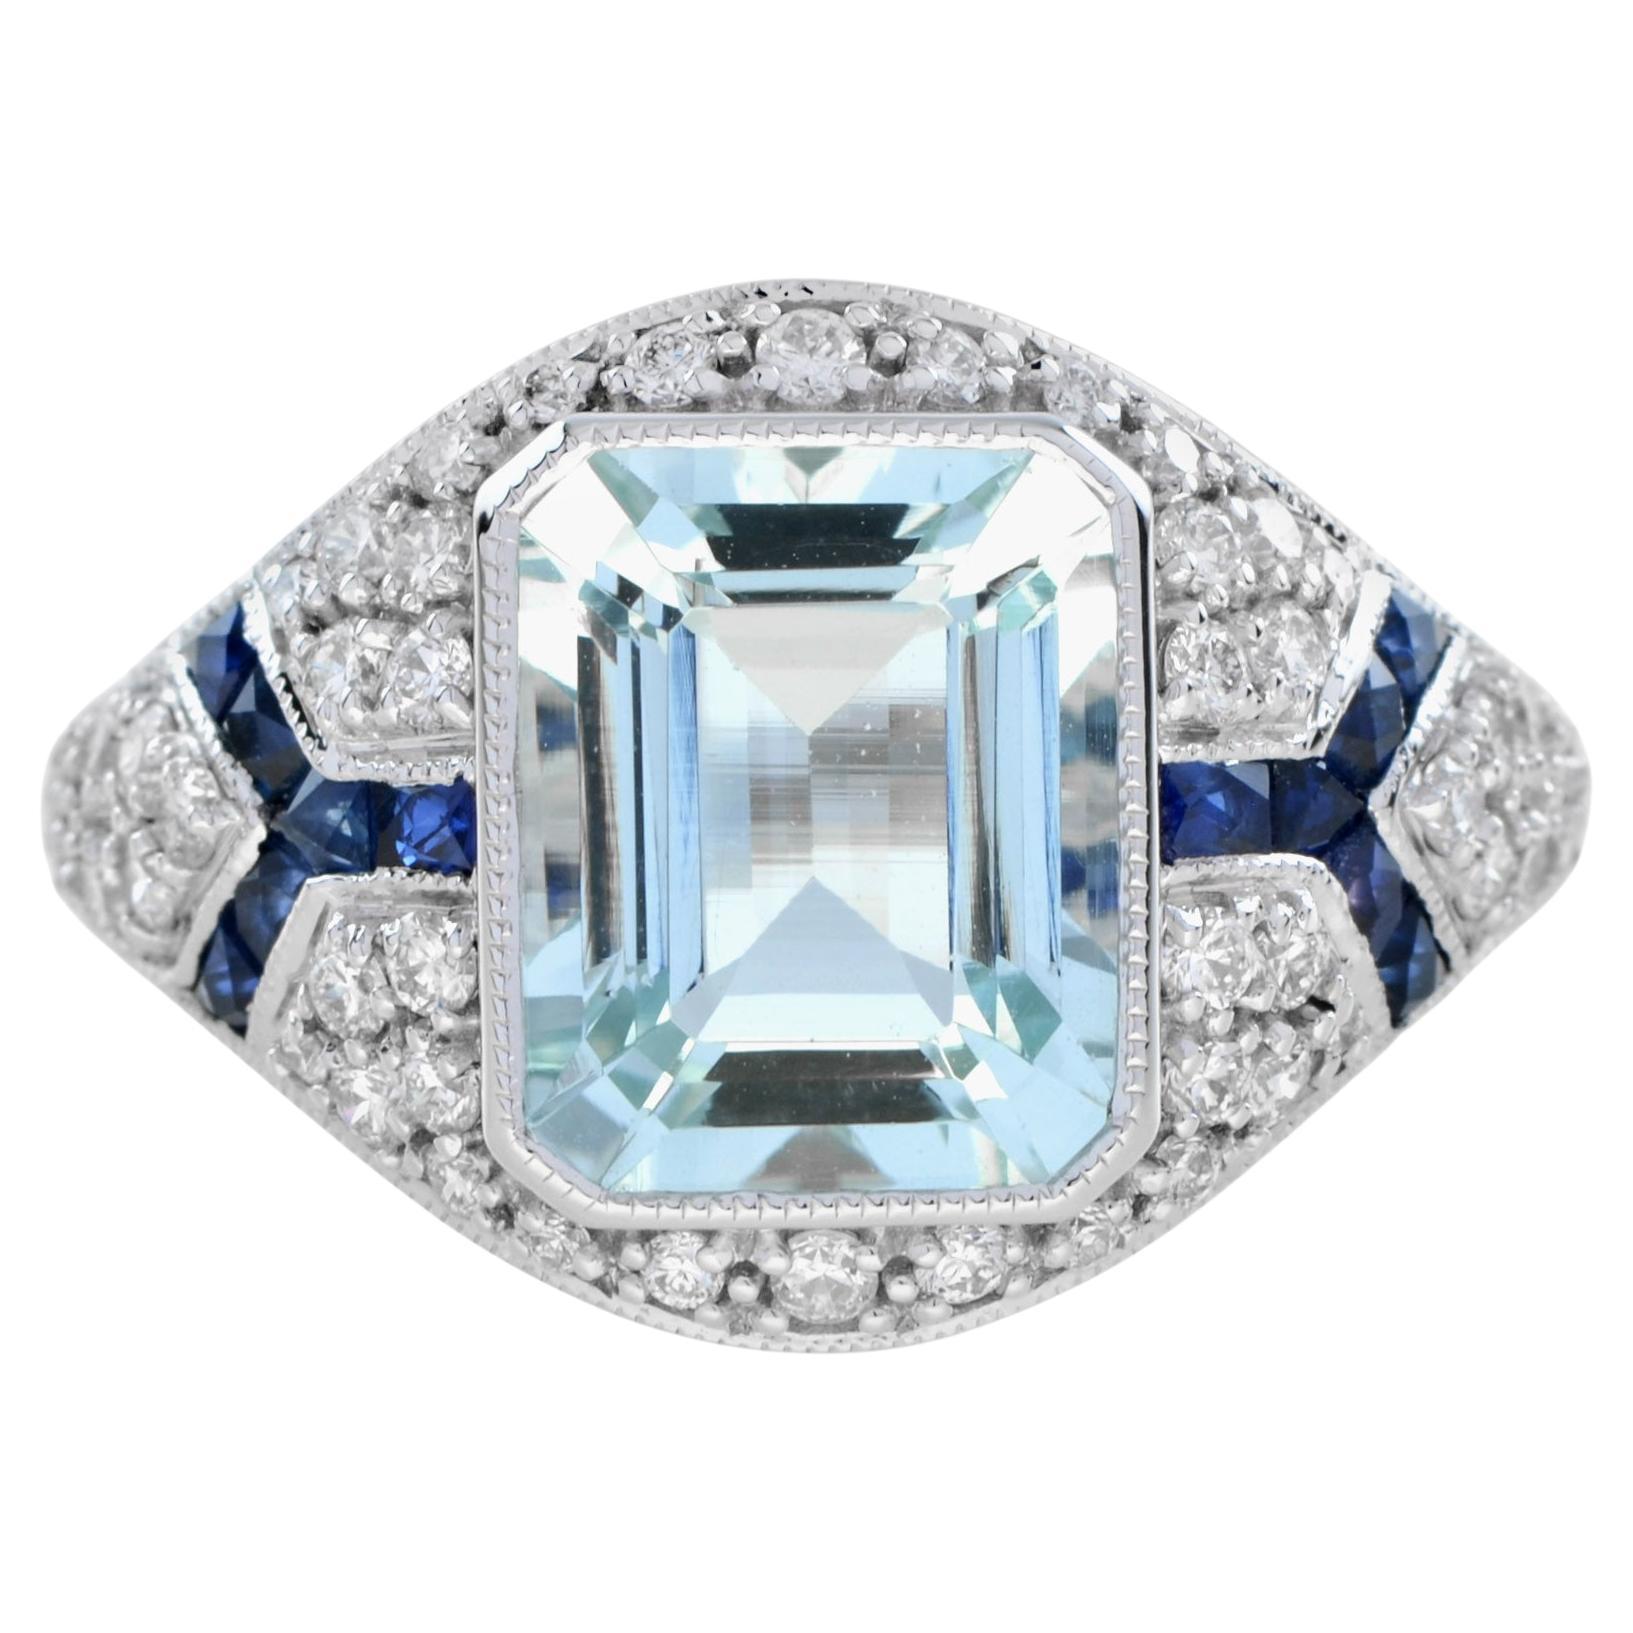 Aquamarine Blue Sapphire Diamond Art Deco Style Engagement Ring in 14K Gold